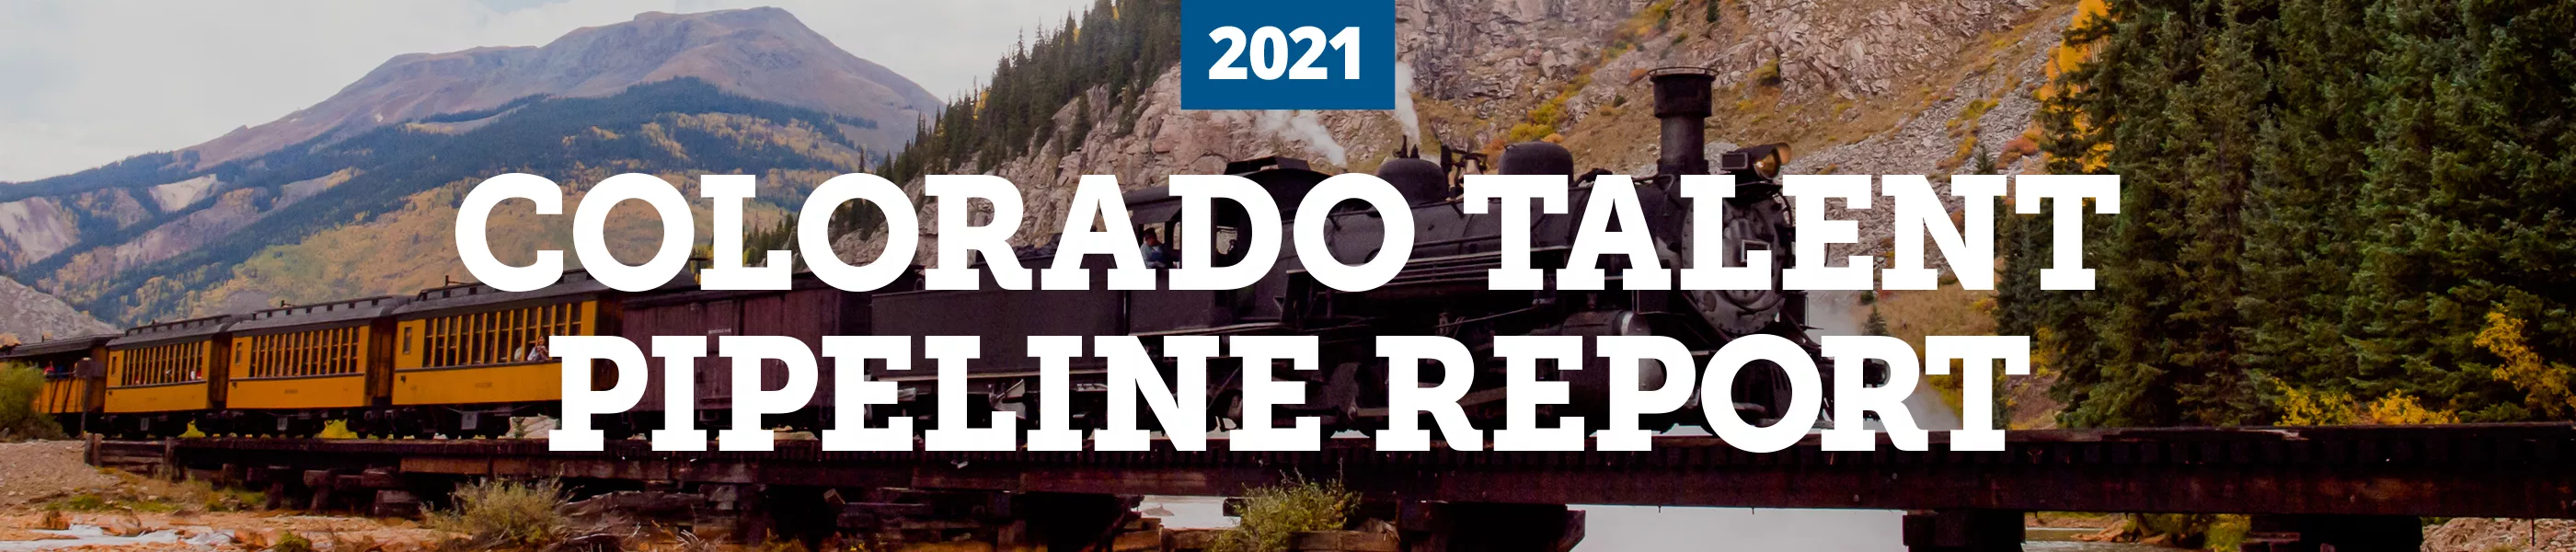 2021 Colorado Talent Pipeline Report